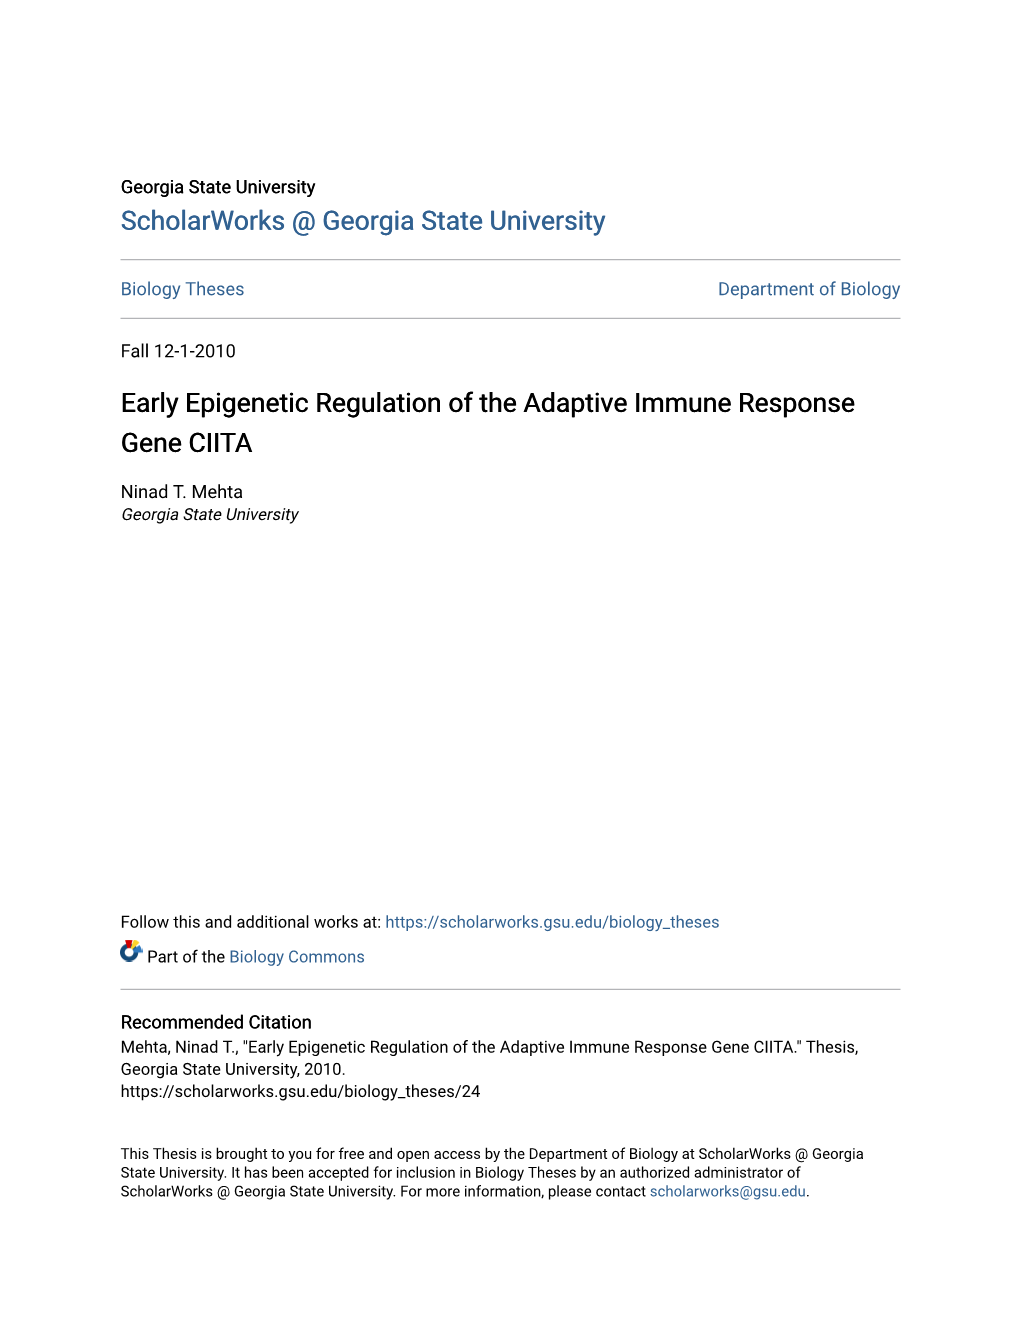 Early Epigenetic Regulation of the Adaptive Immune Response Gene CIITA